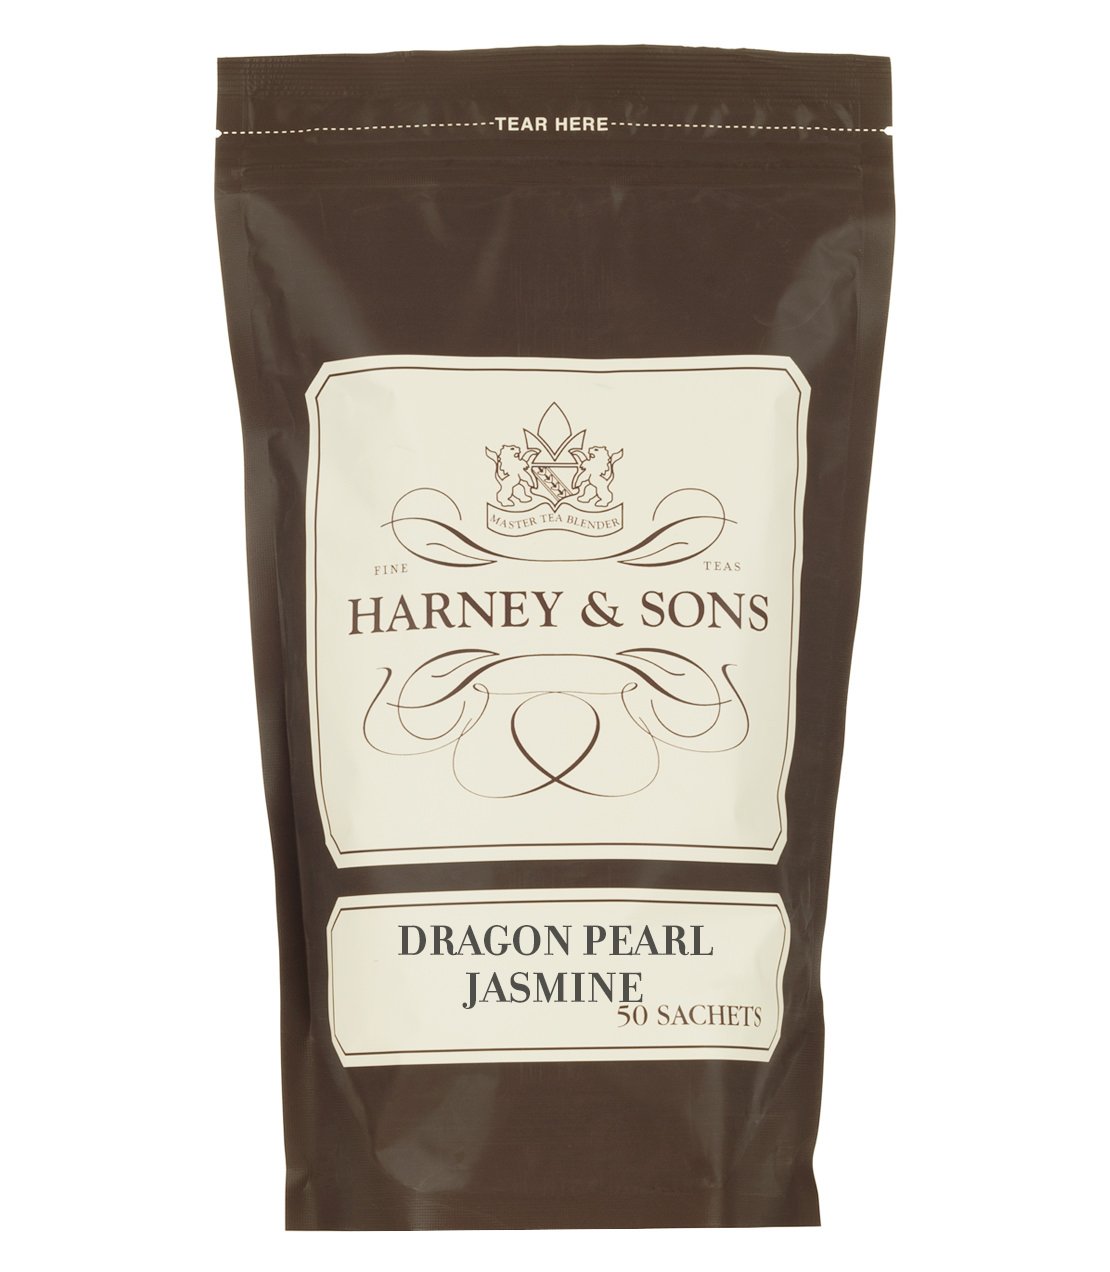 Dragon Pearl Jasmine, Bag of 50 Sachets - The best Jasmine Tea - Harney & Sons Fine Teas Europe